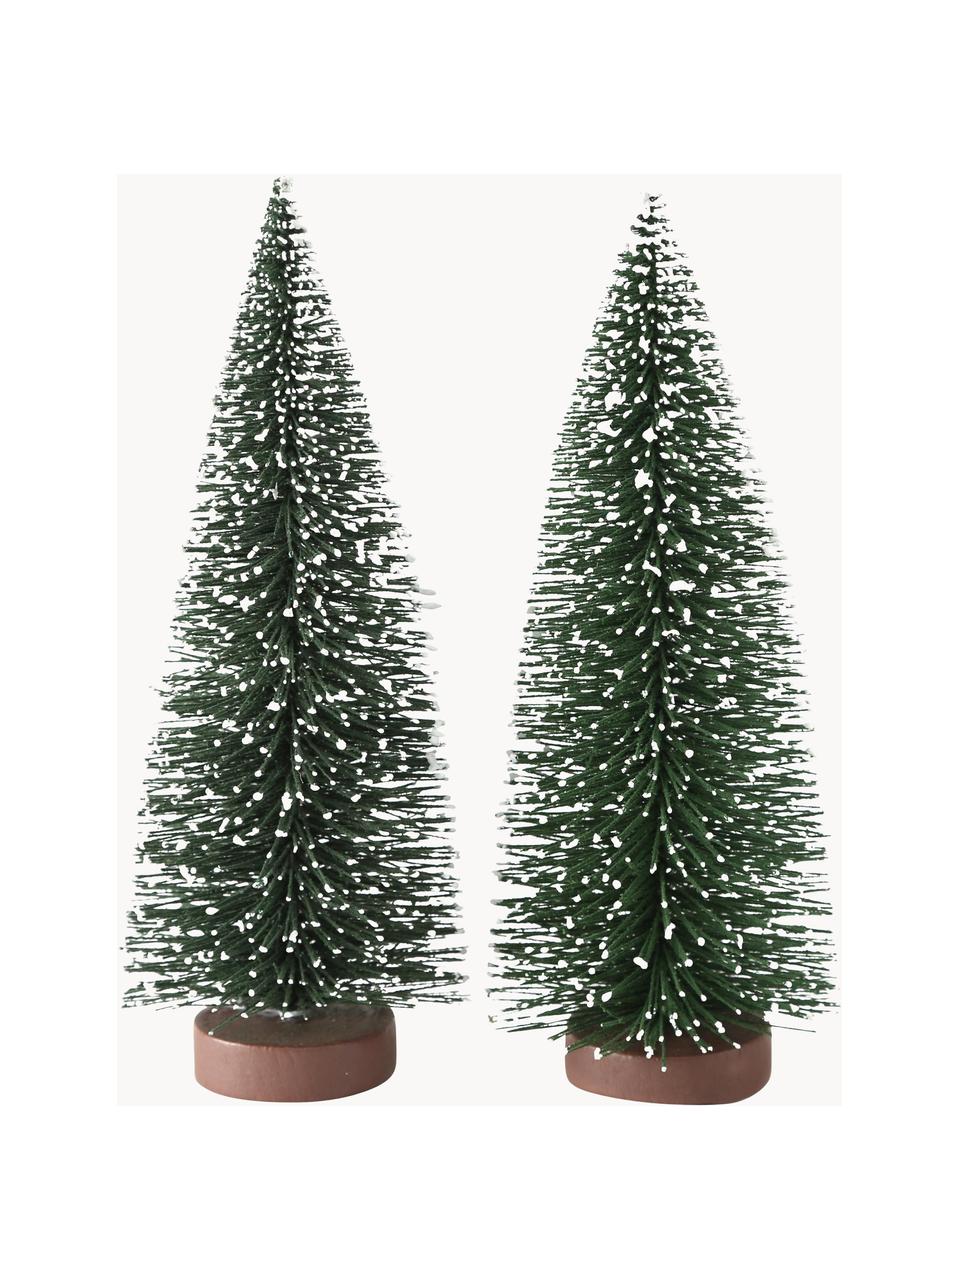 Sapins de Noël décoratifs Tarvo, 2 élém., Plastique, Vert, blanc, brun, Ø 9 x haut. 22 cm